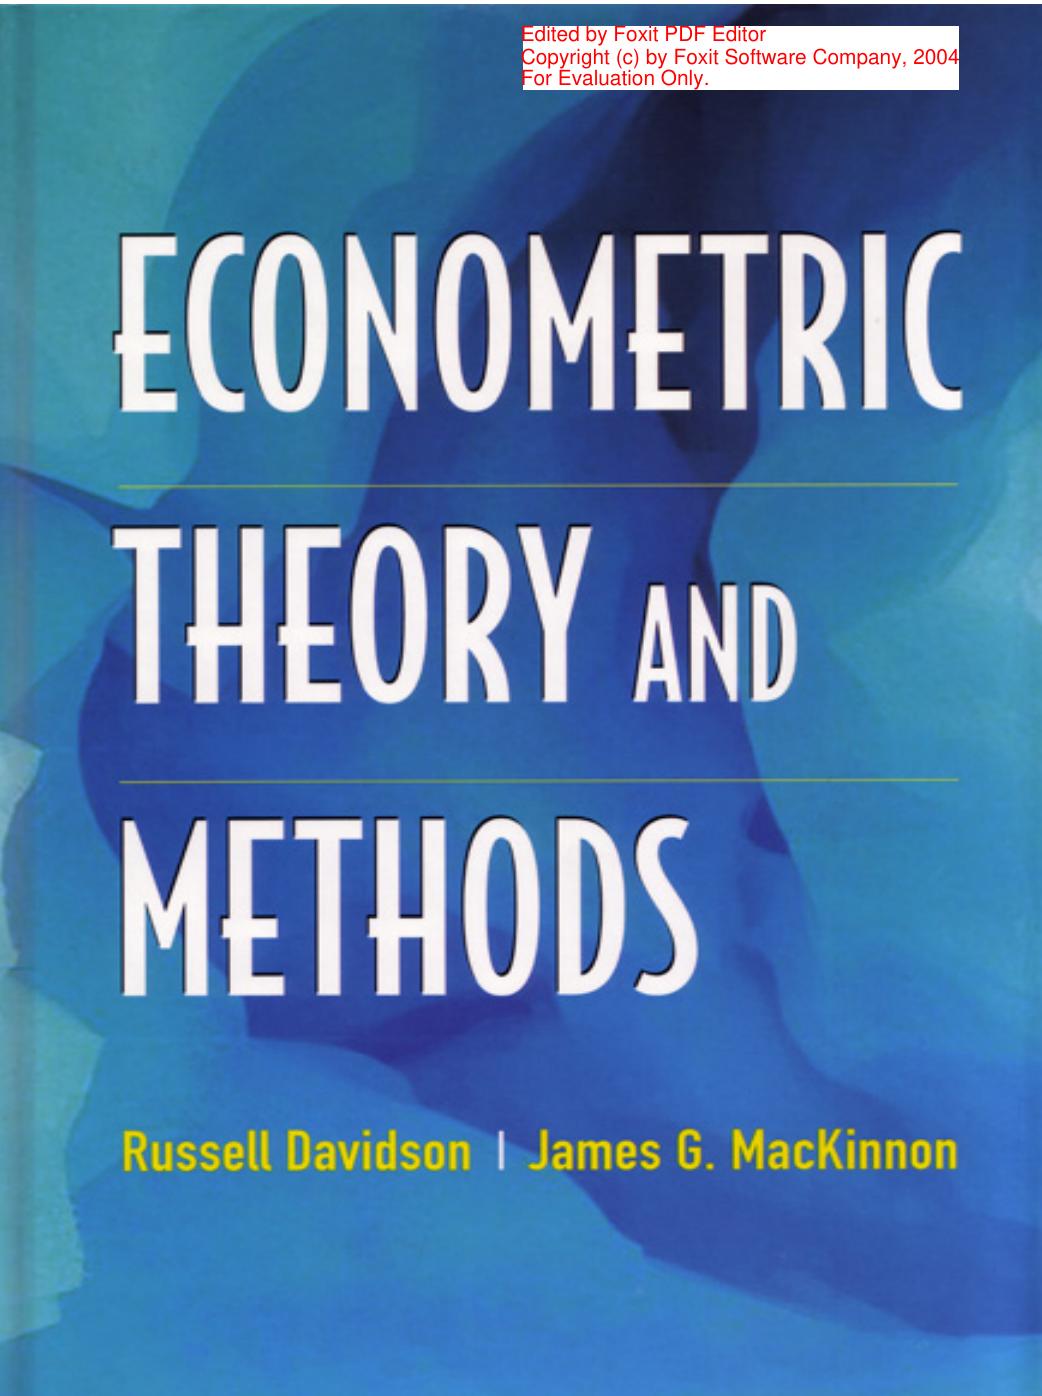 Econometric Theory And Methods Solutions (Davidson & Mckinno